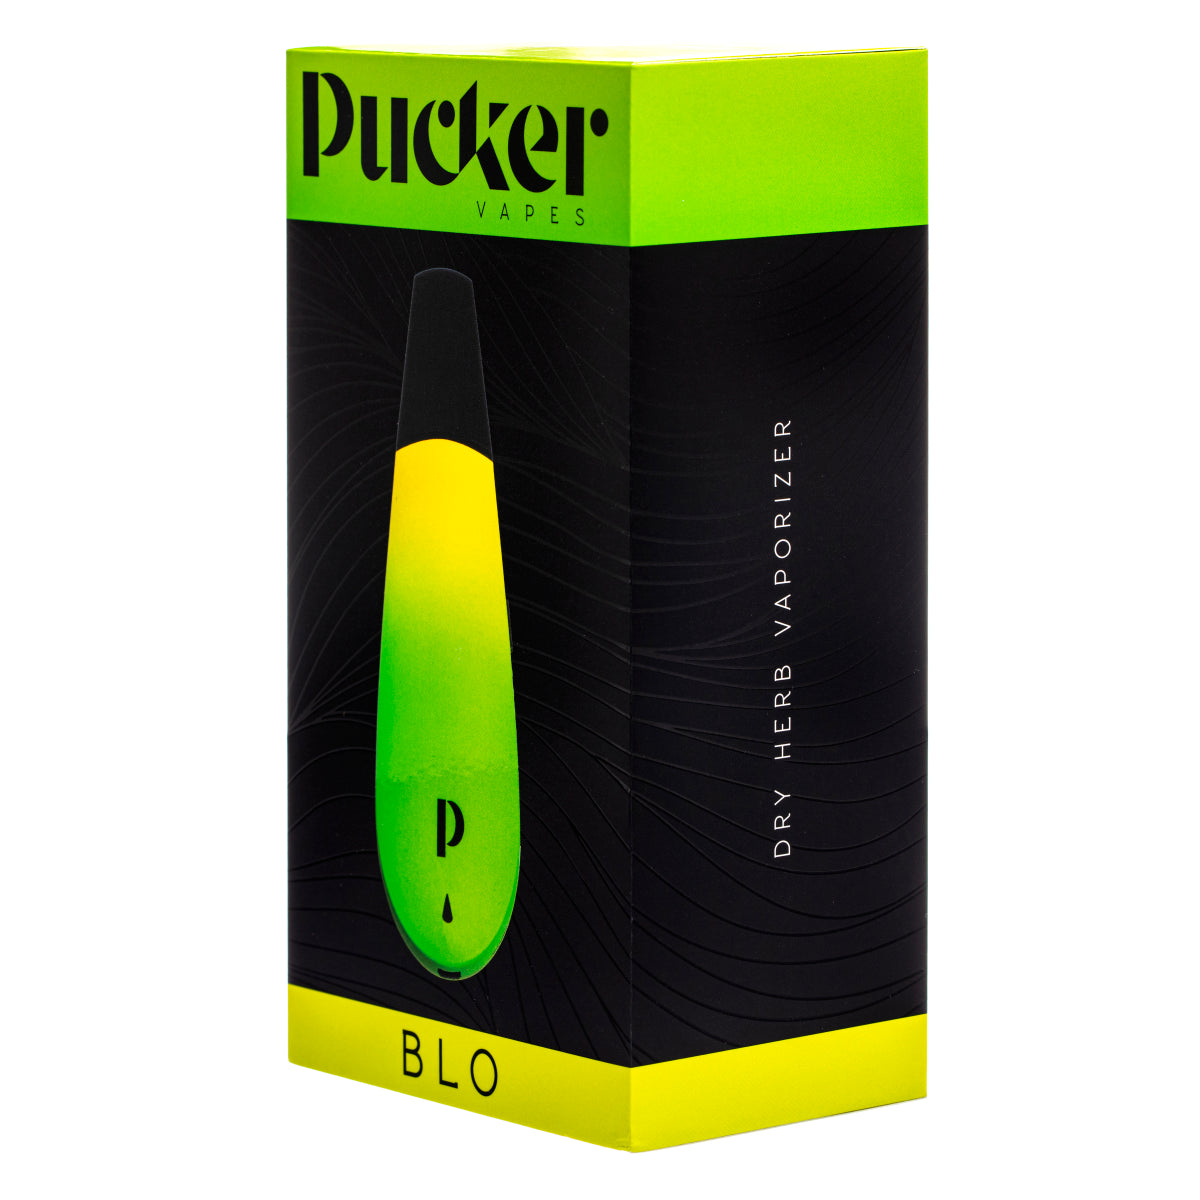 PUCKER "Blo" Dry Smoking Vaporizer - (1 Count)-Vaporizers, E-Cigs, and Batteries